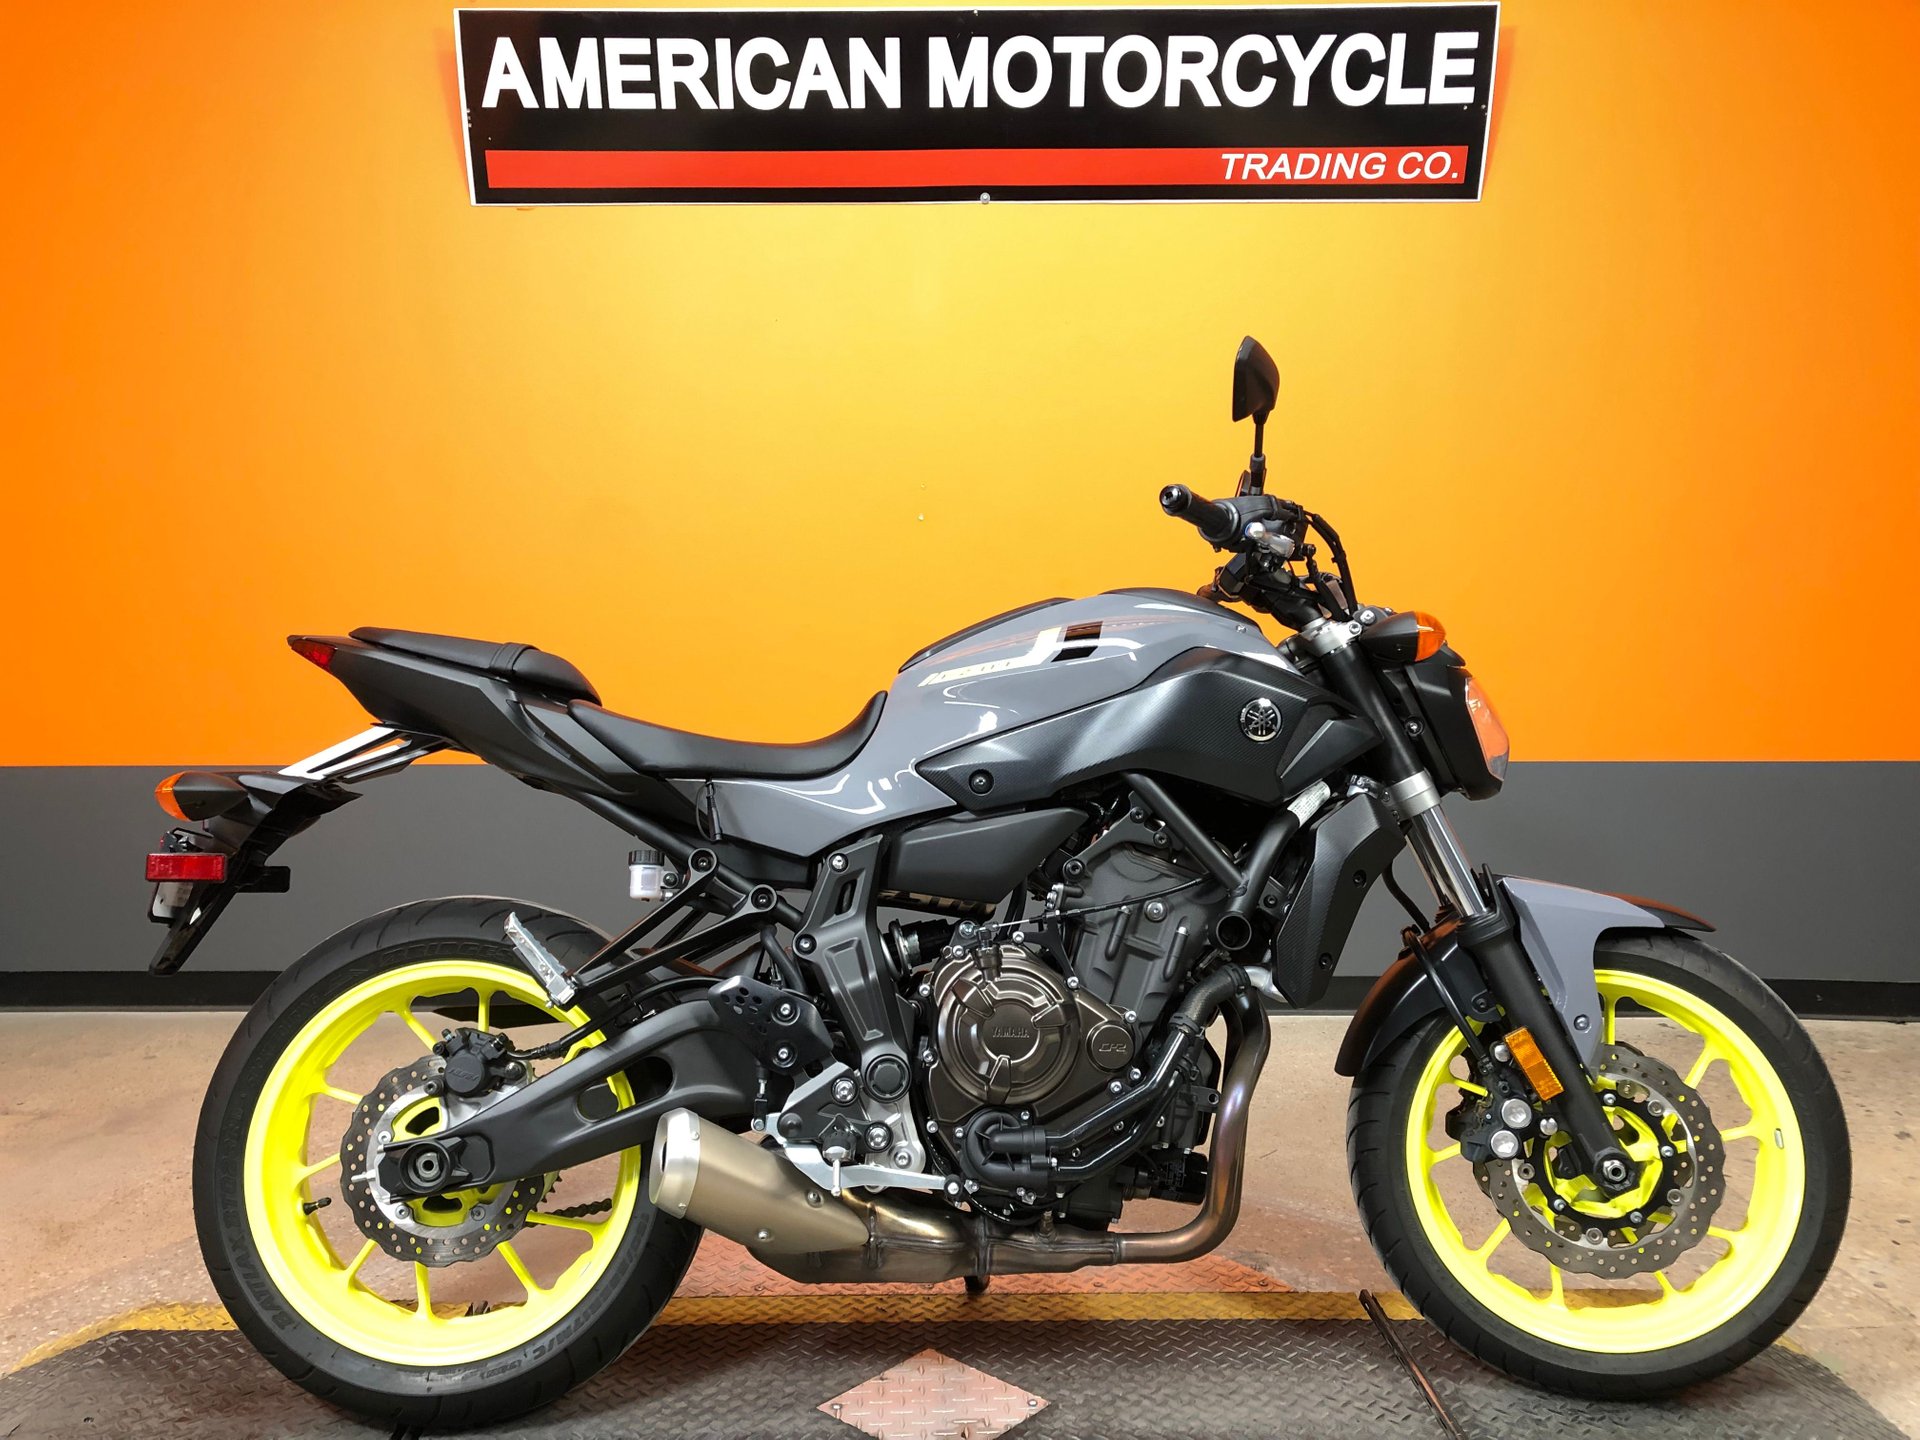 2016 Yamaha FZ-07 | American Motorcycle Trading Company - Used Harley ...